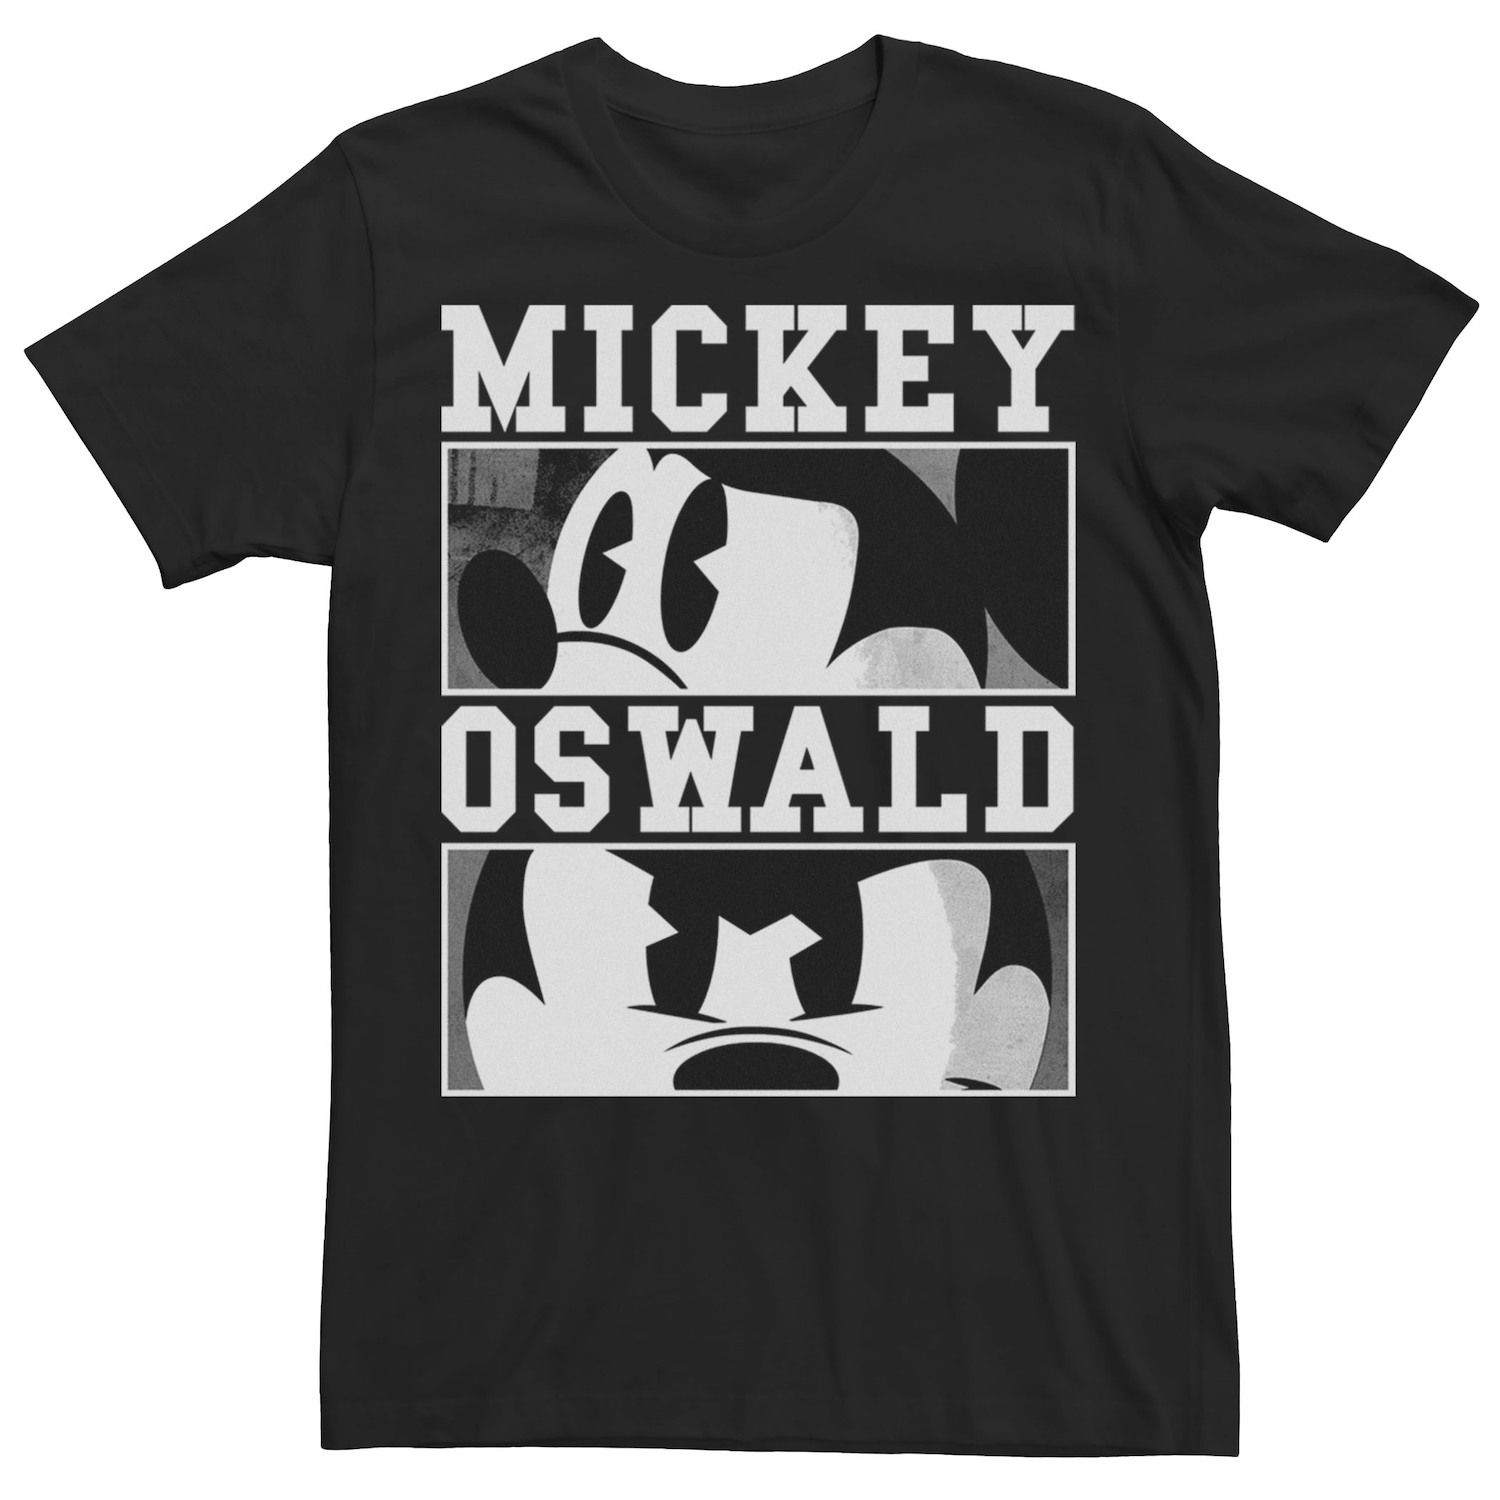 Мужская футболка Disney Epic Mickey And Oswald со вставками Licensed Character мужская футболка с портретом disney epic mickey painting licensed character